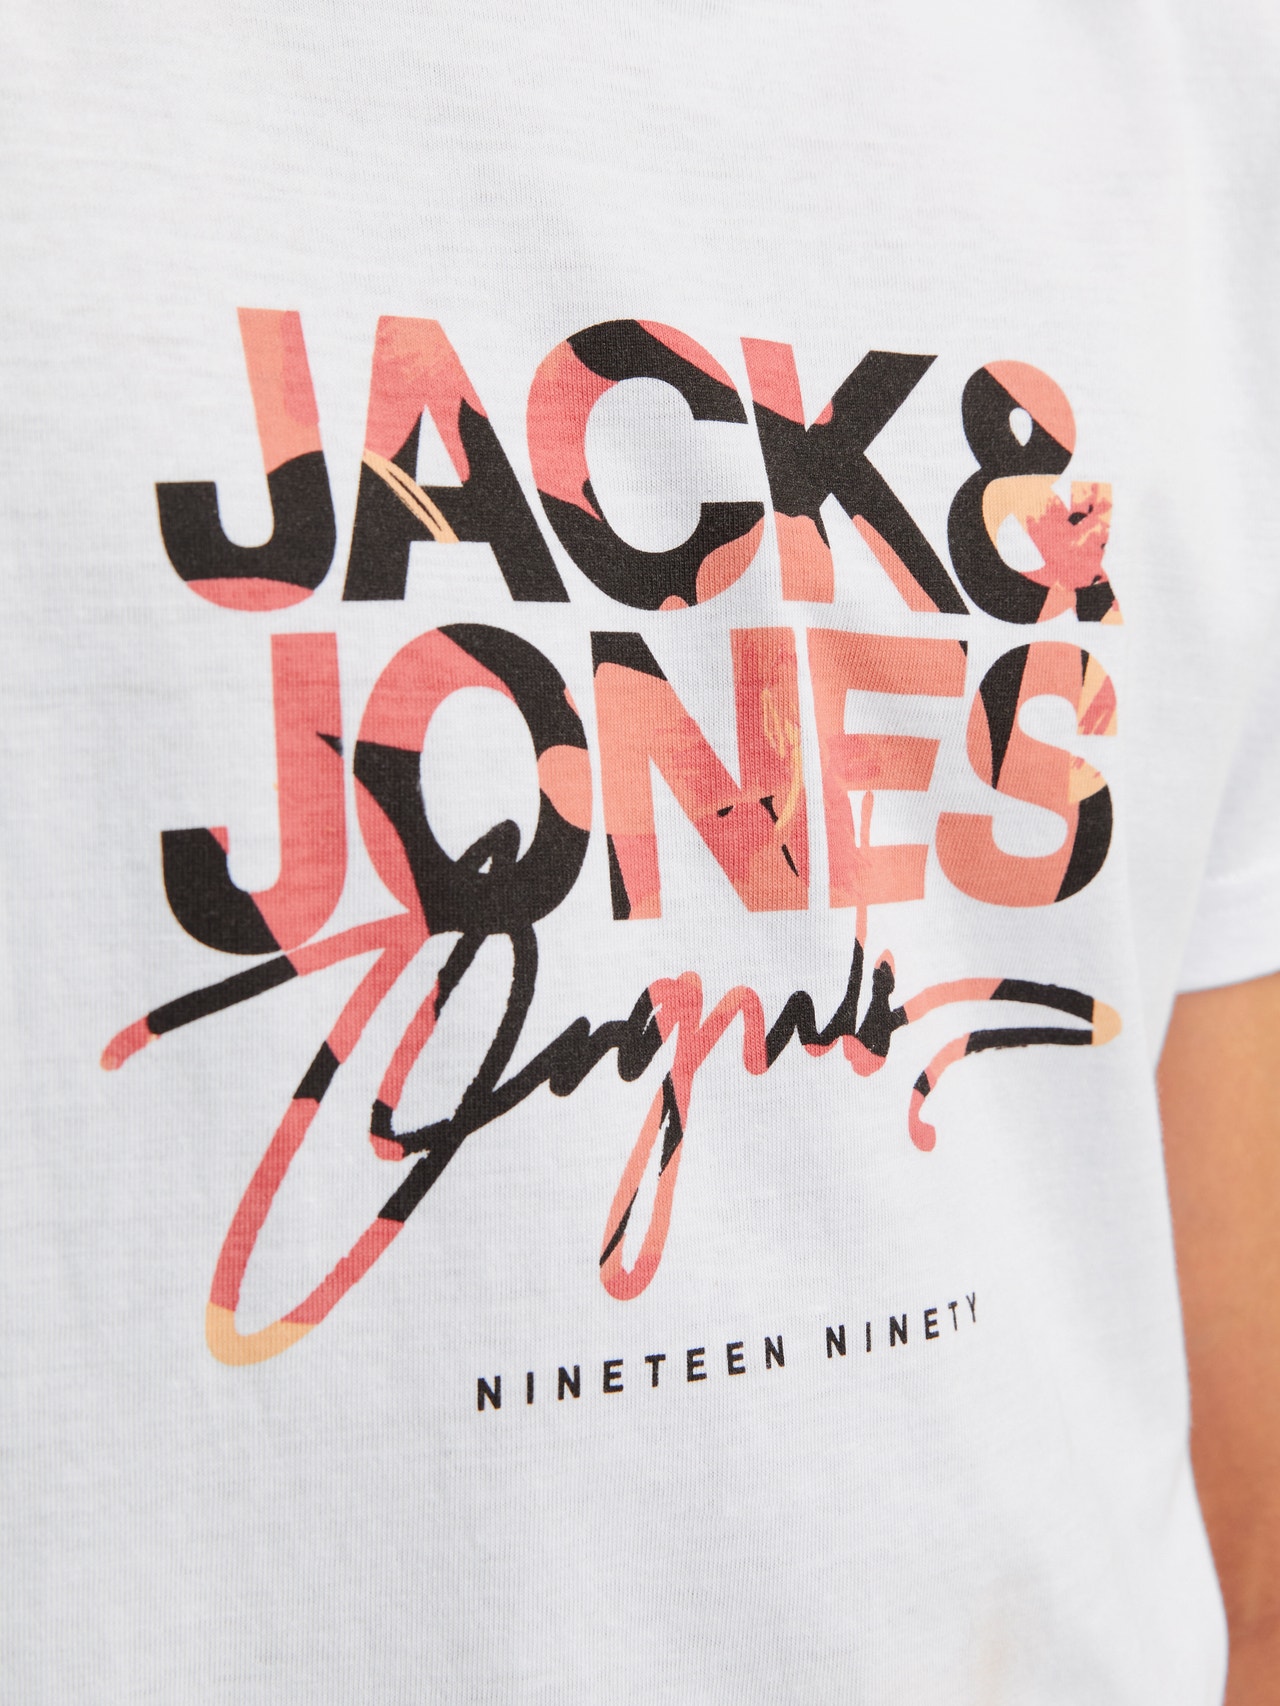 Jack & Jones T-shirt Stampato Per Bambino -Bright White - 12257133